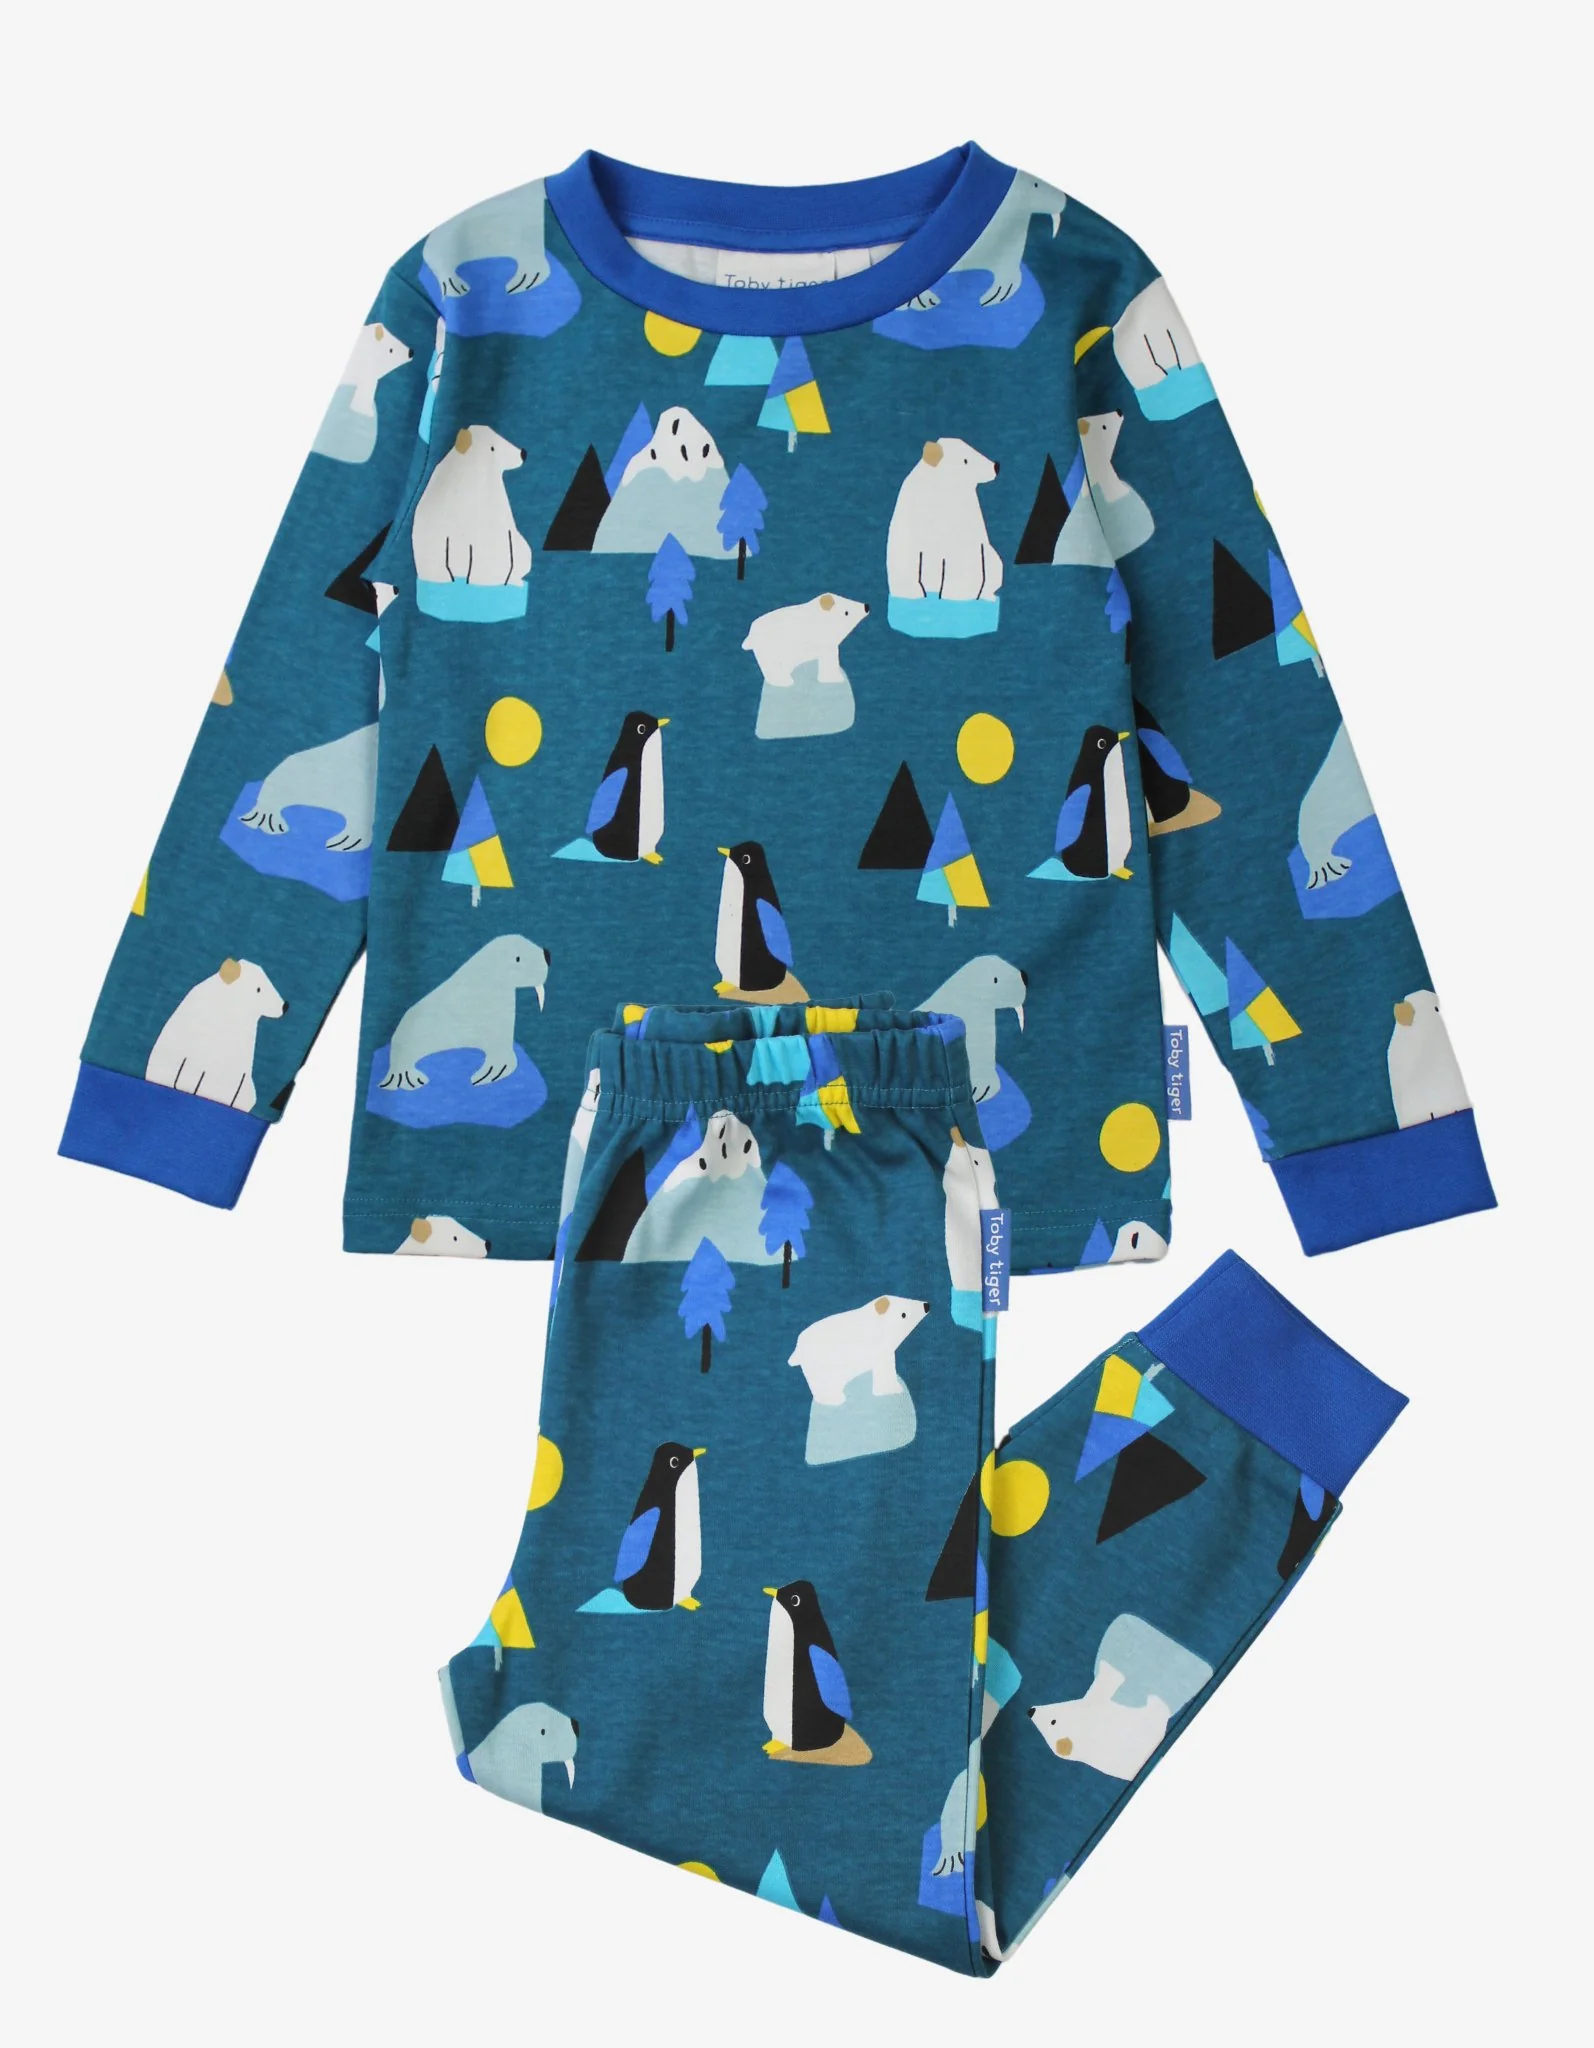 Toby Tiger Organic Arctic Print Pyjamas